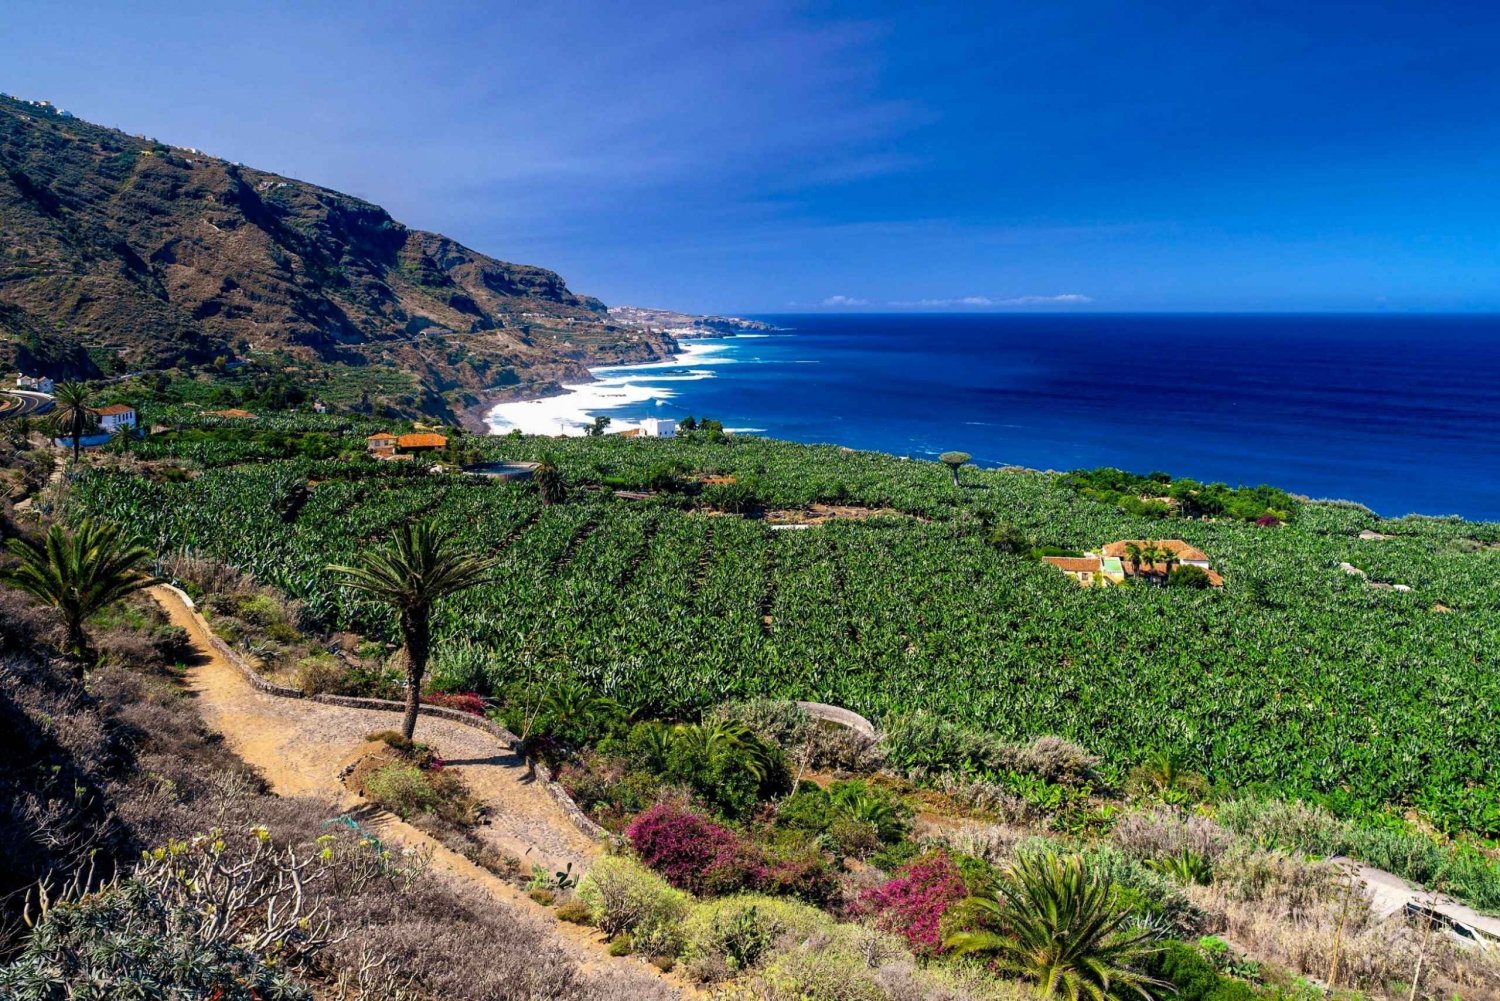 Privat tur på Tenerife: Historisk nord på en hel dag